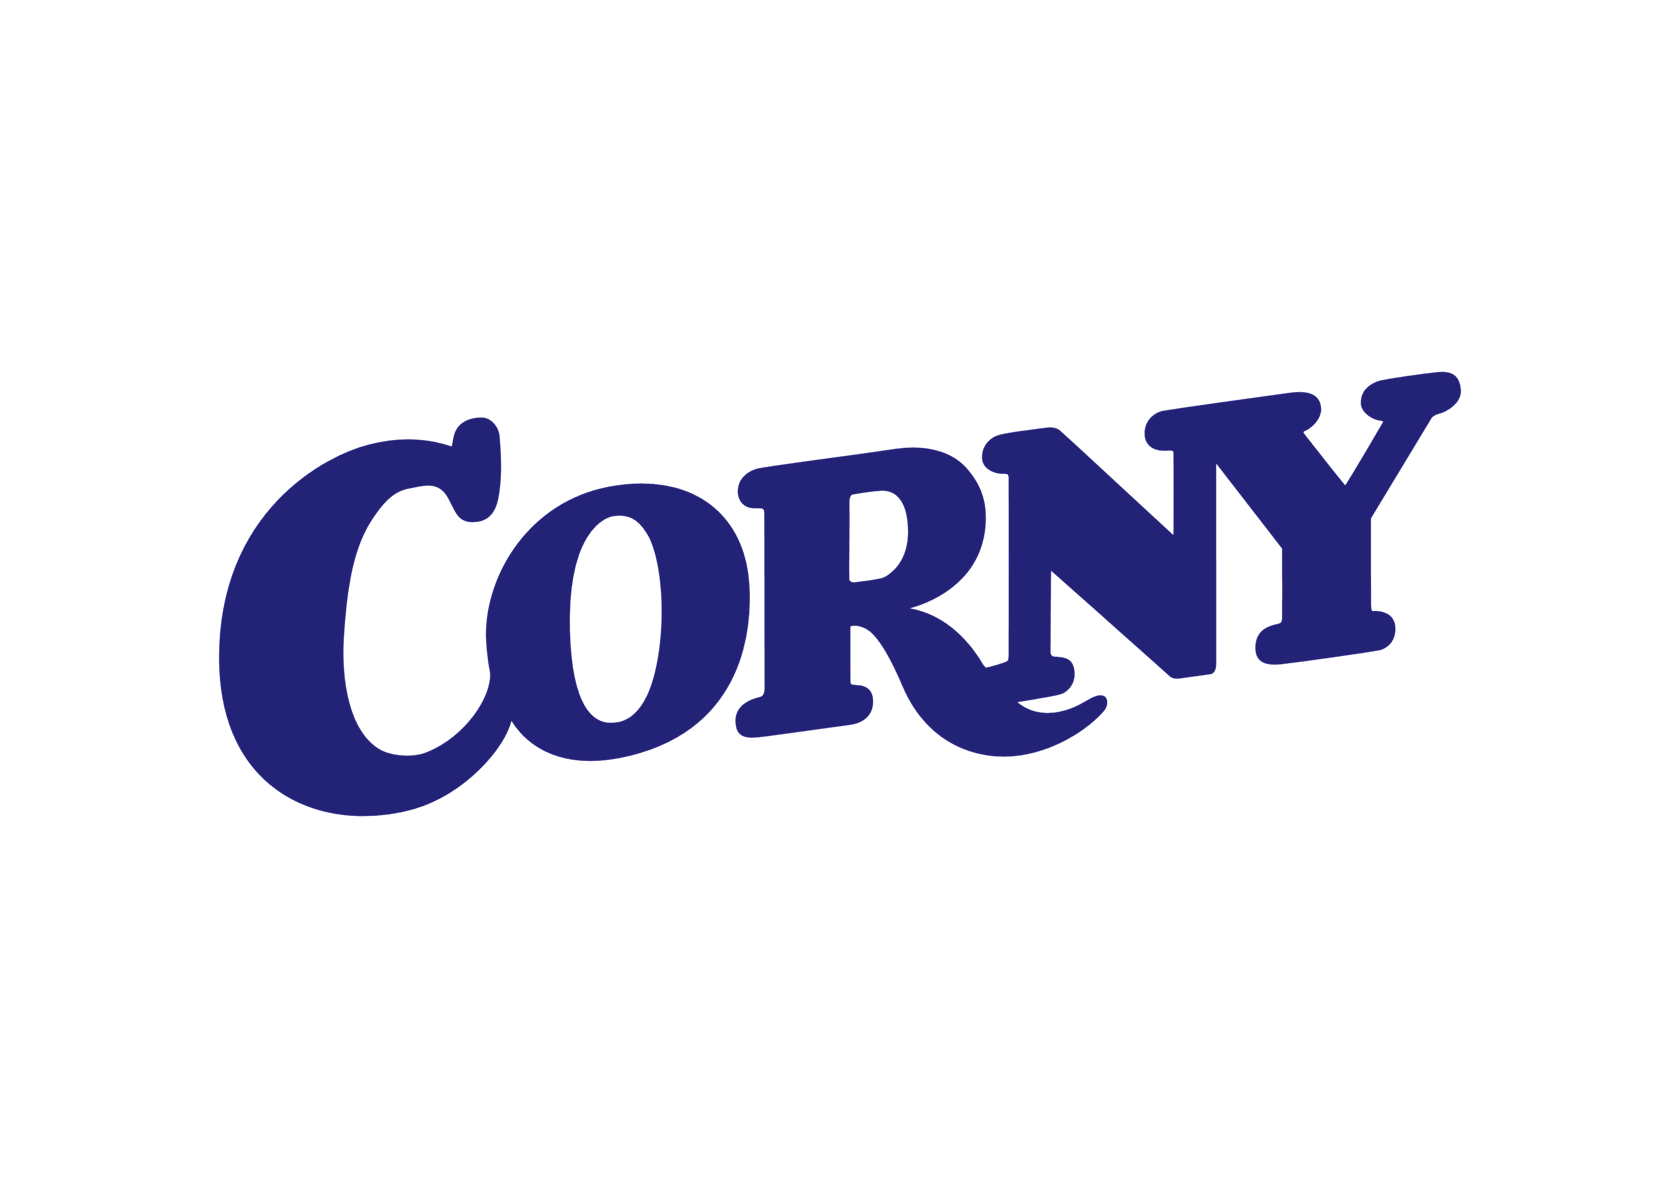 The corny doc